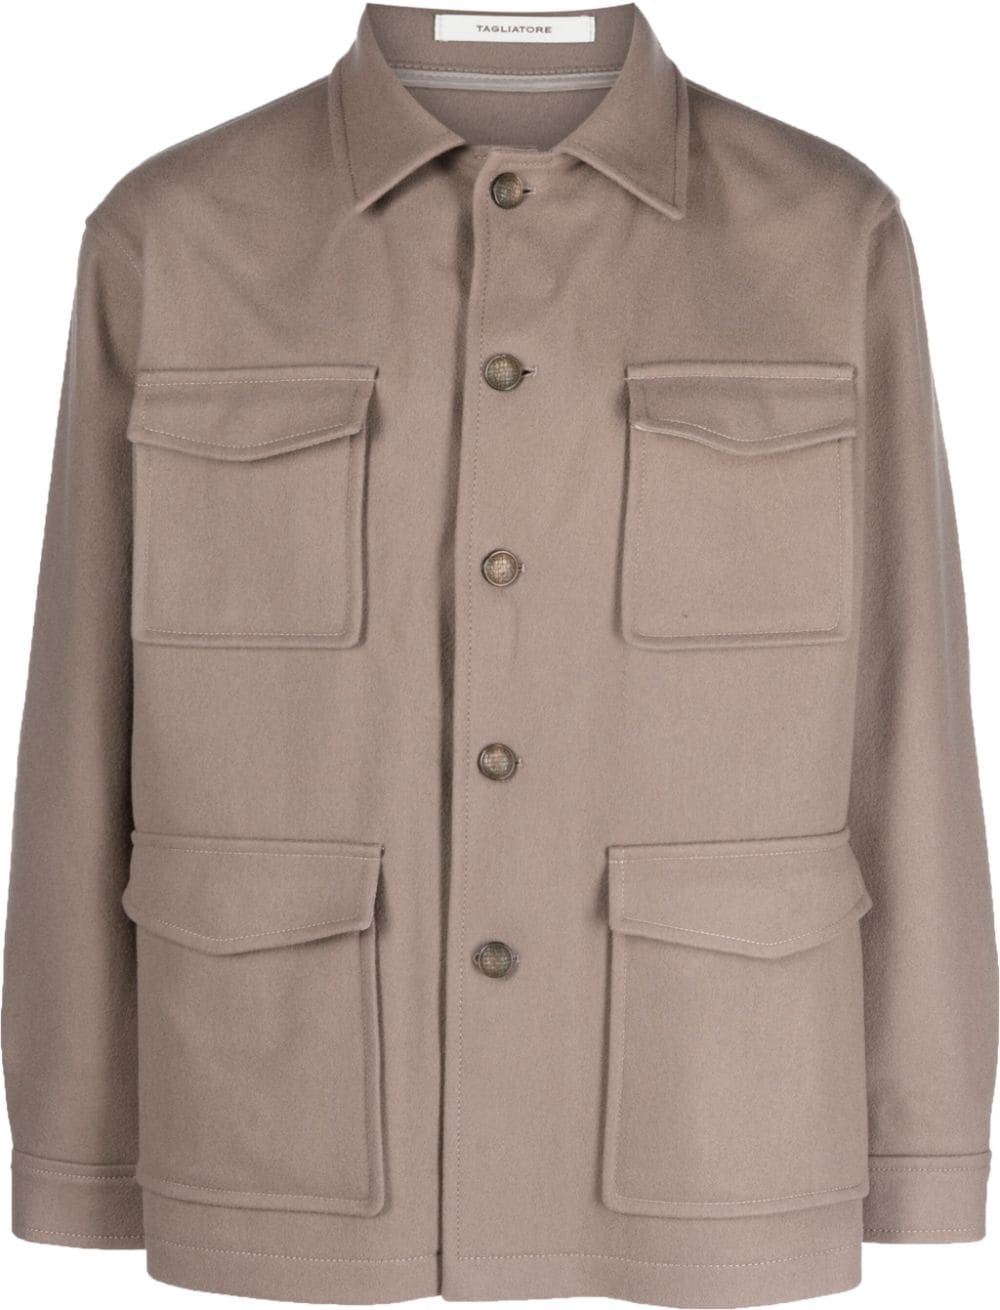 Tagliatore button-up knitted shirt jacket - Grey von Tagliatore